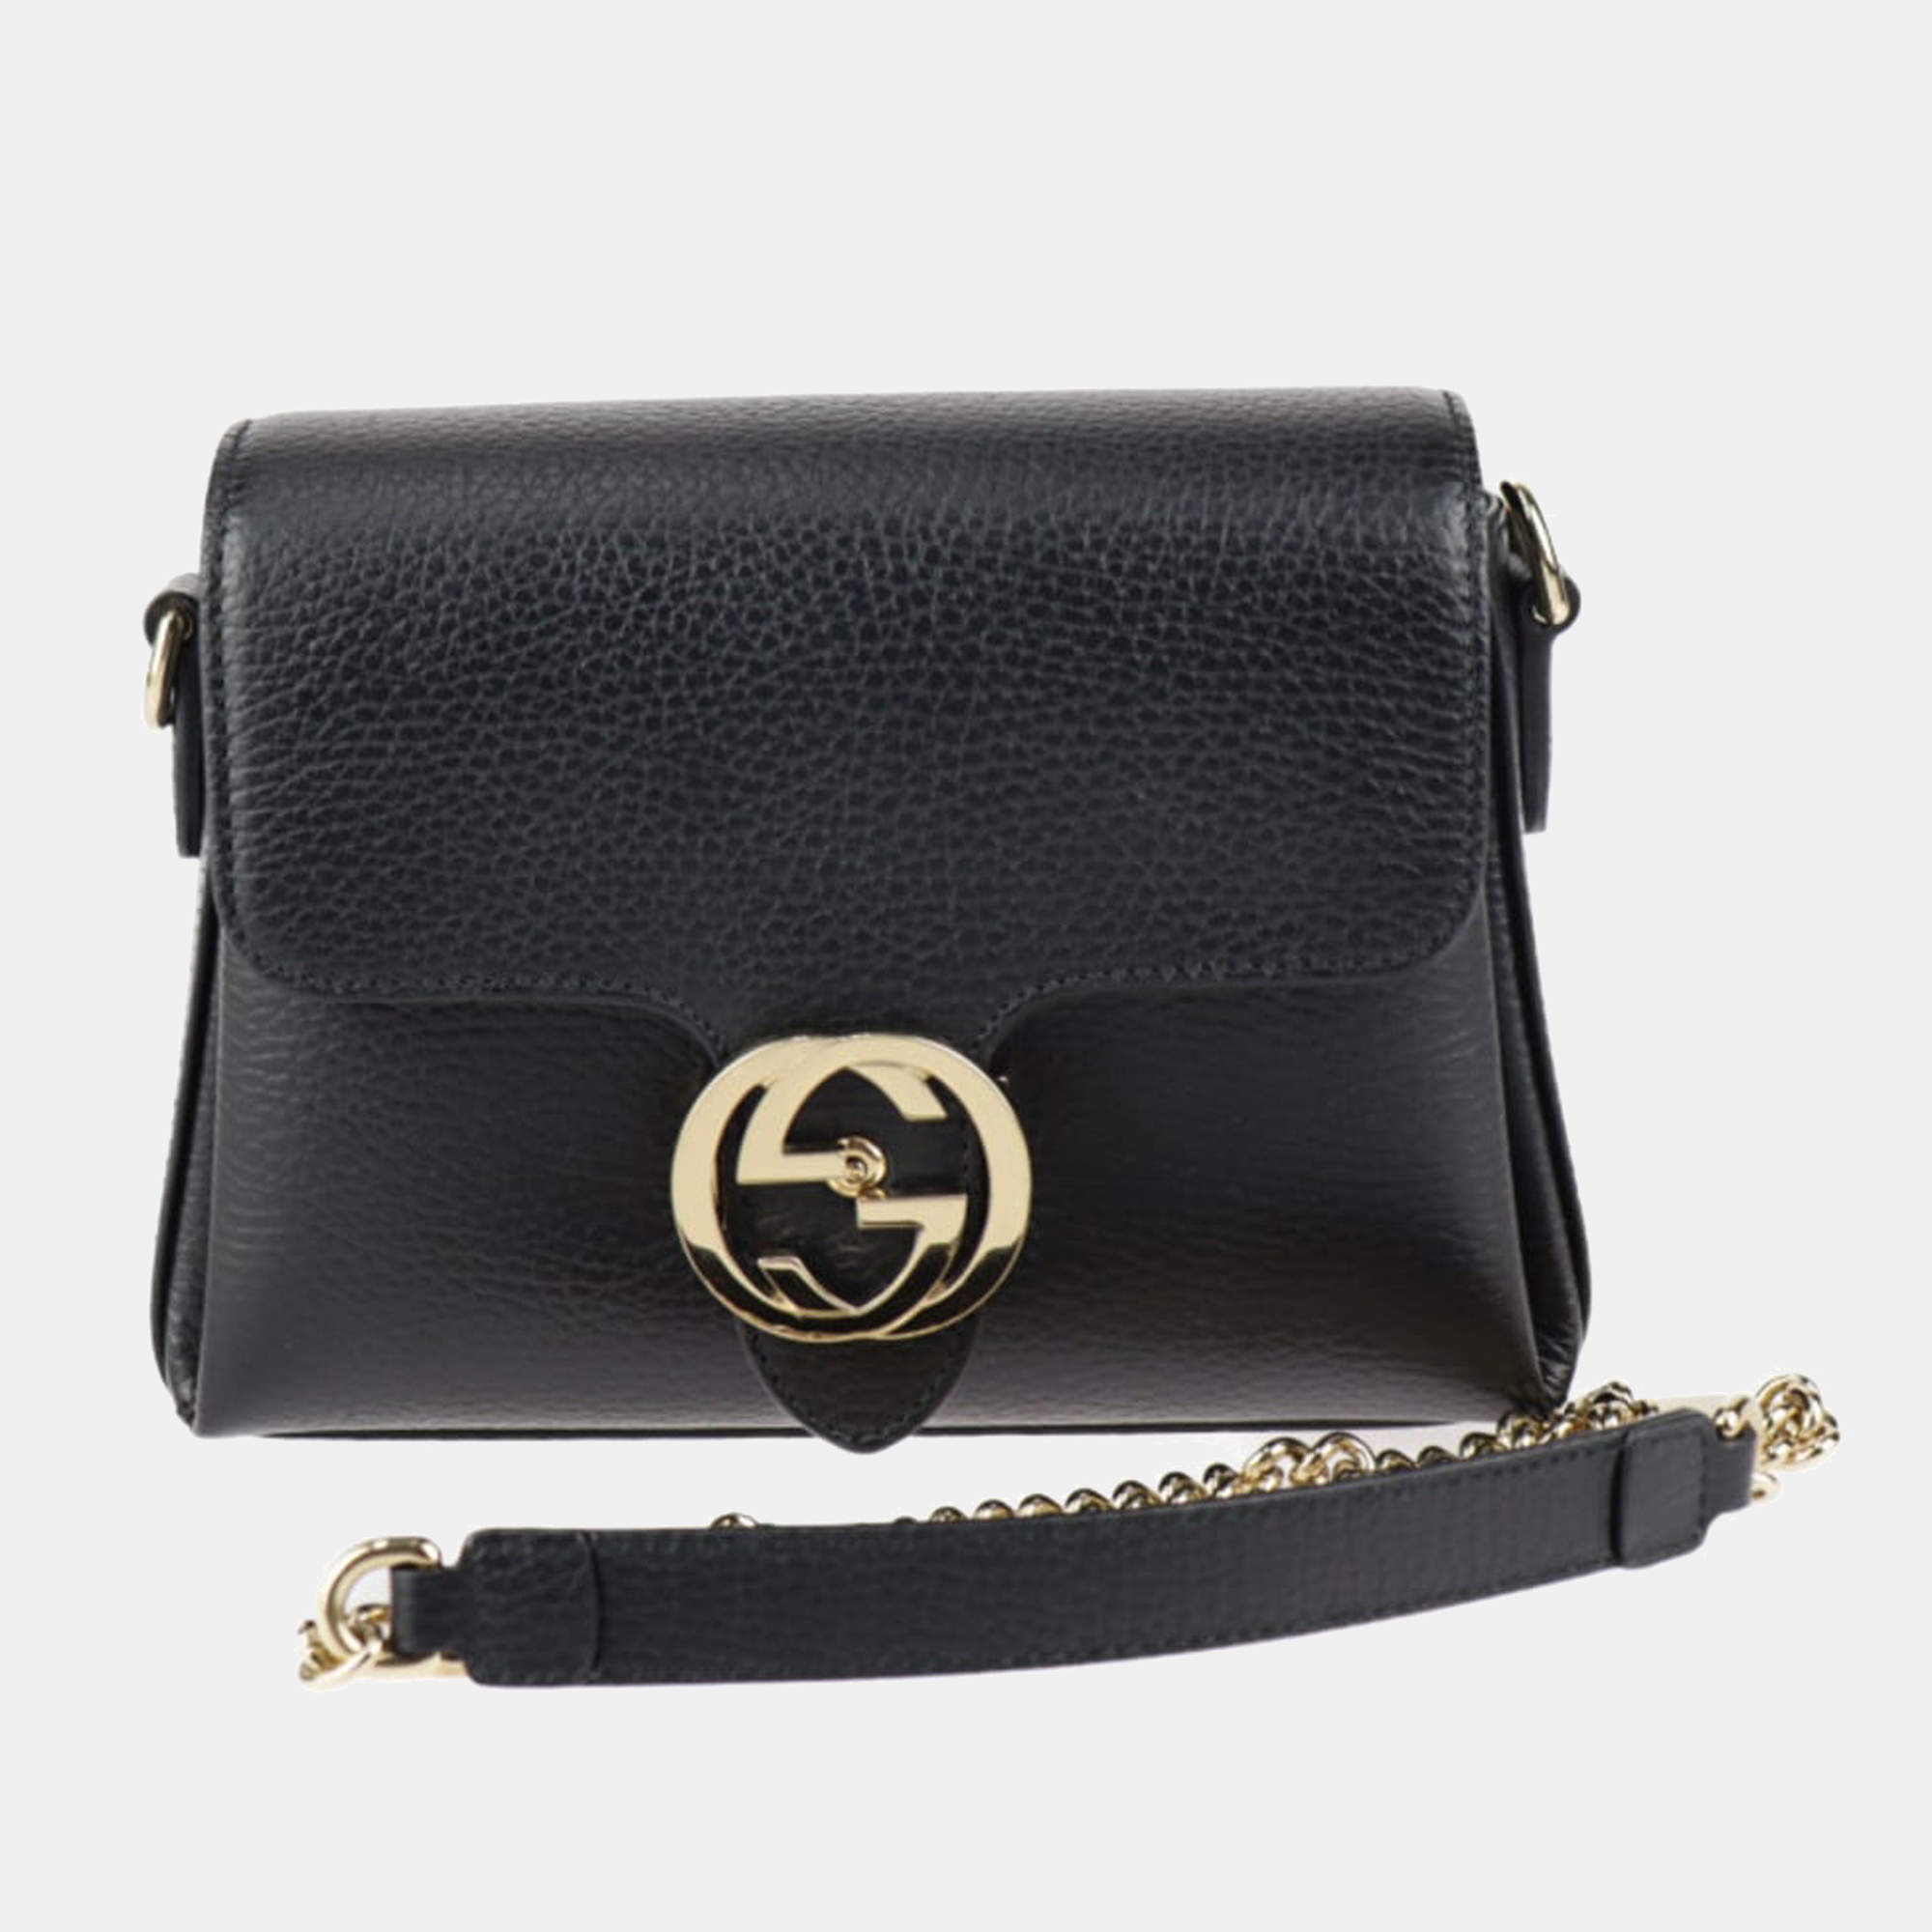 Gucci Borsa Interlocking GG Crossbody  Purses and handbags, Branded  handbags, Gucci leather